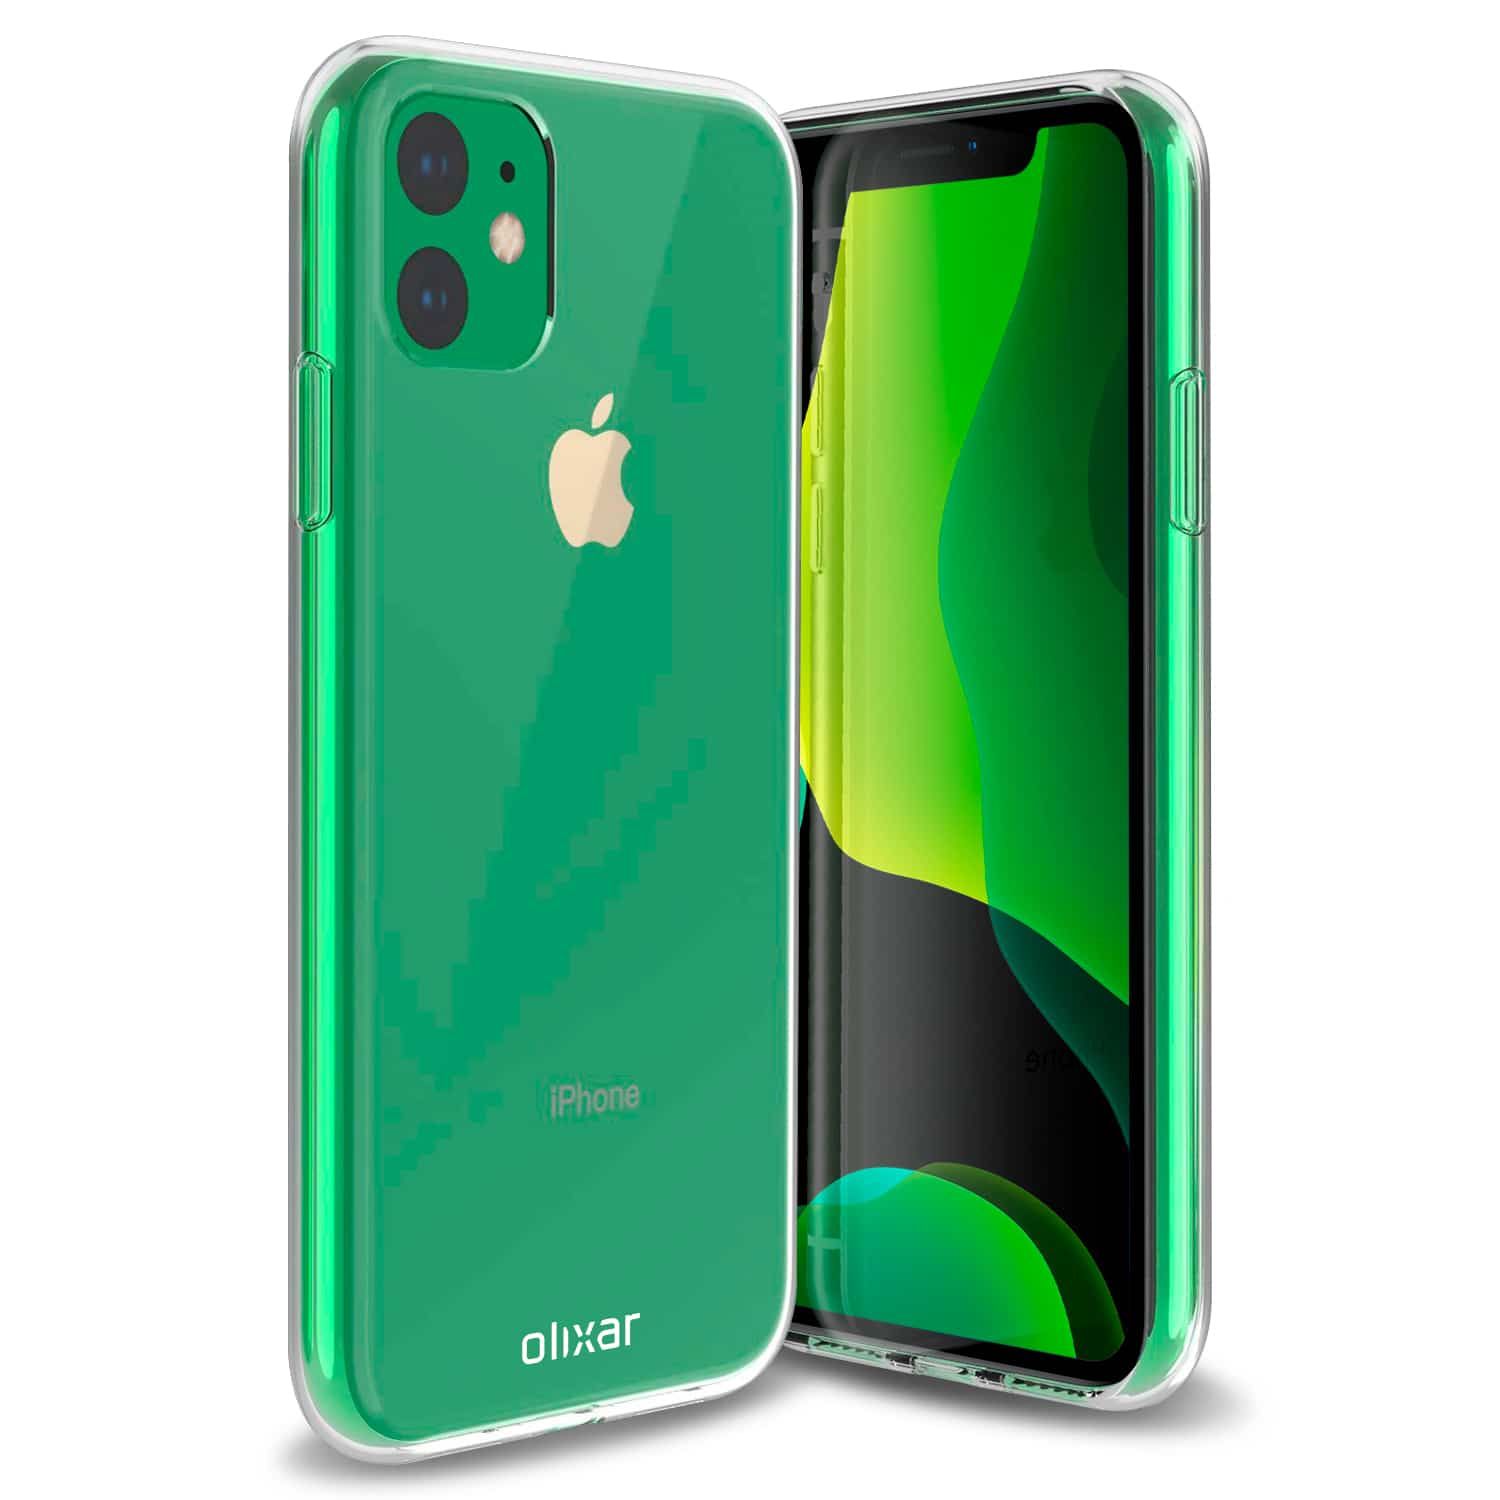 Varian warna hijau untuk iPhone 11